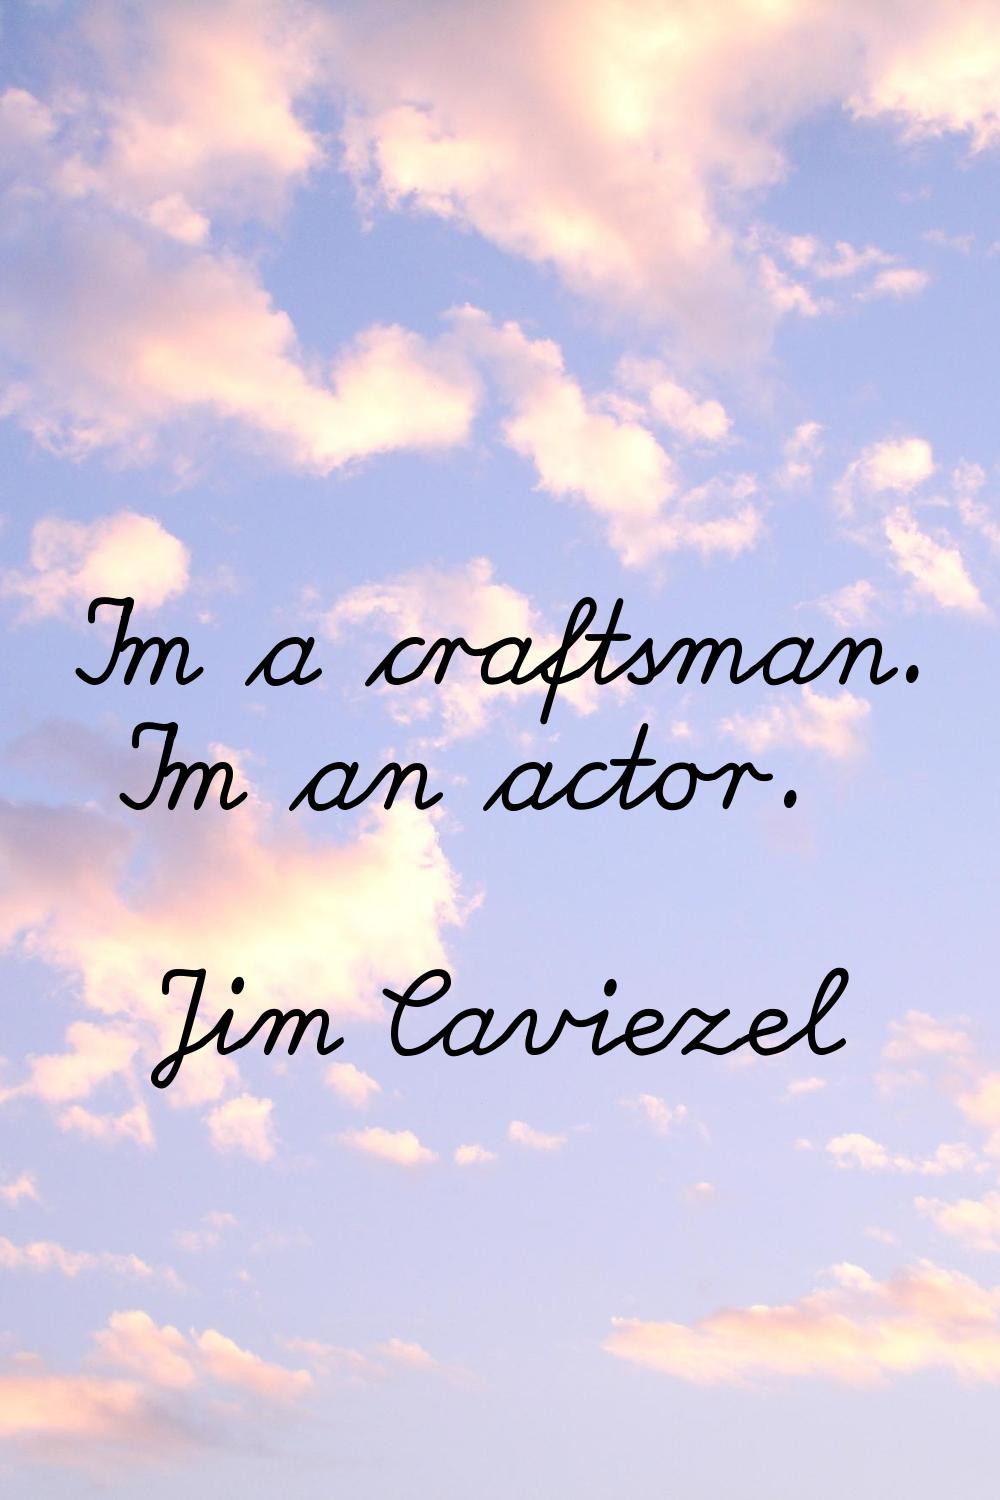 I'm a craftsman. I'm an actor.